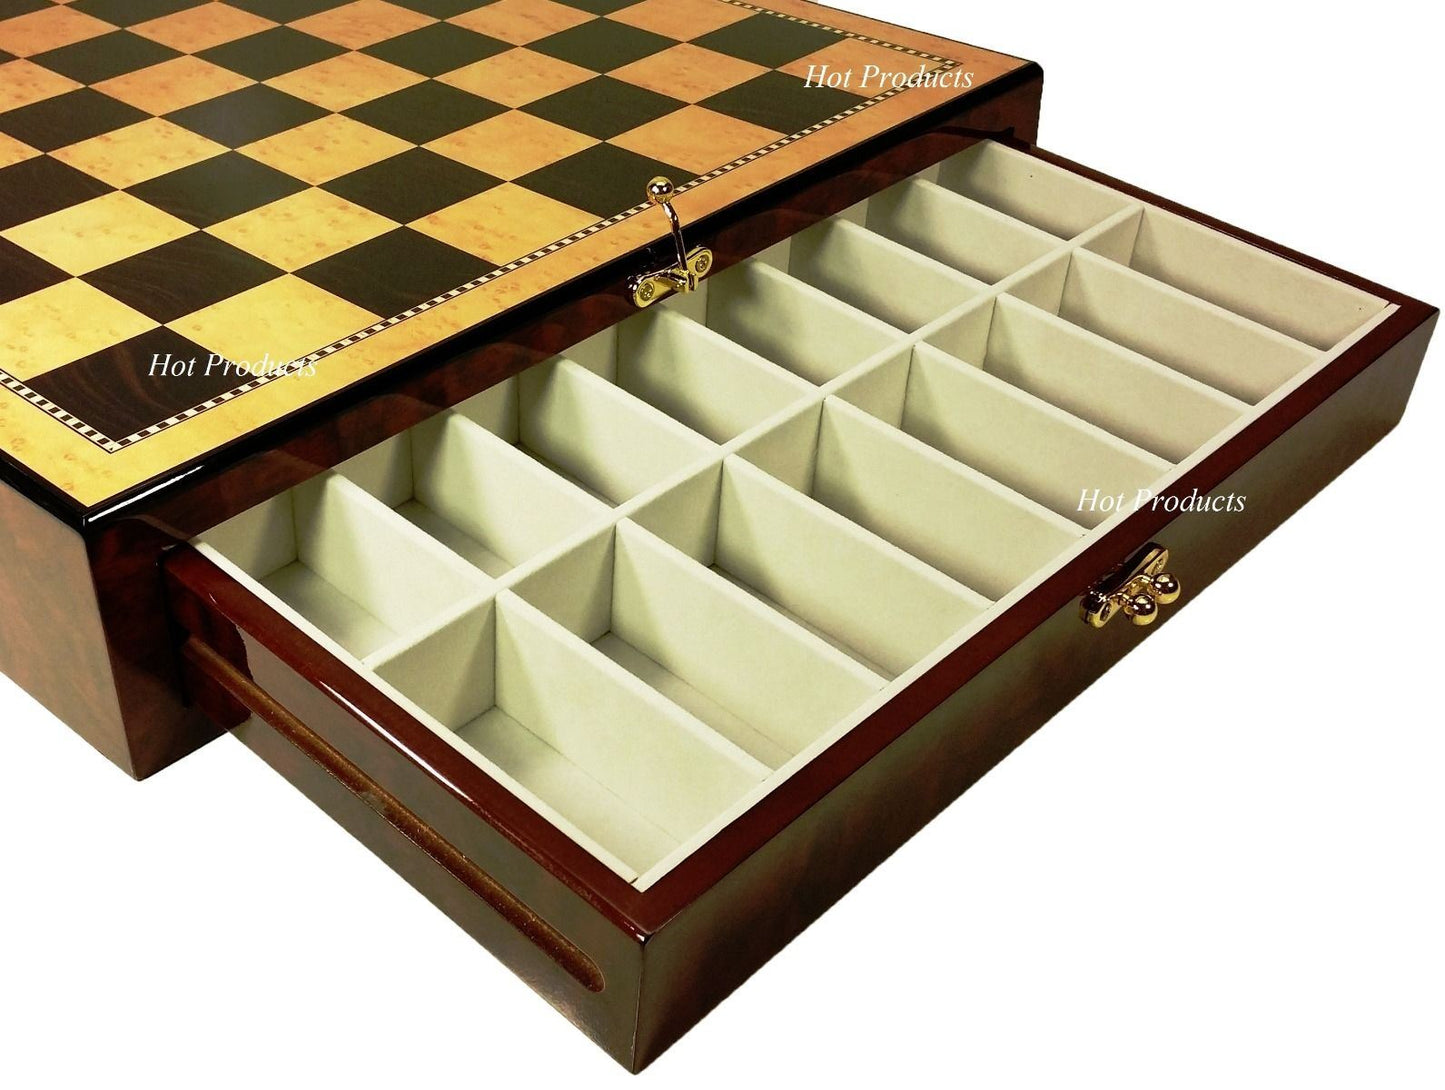 4QN BLACK Opposite Tops Staunton Wood Chess Set W 17" Walnut Color Storage Board